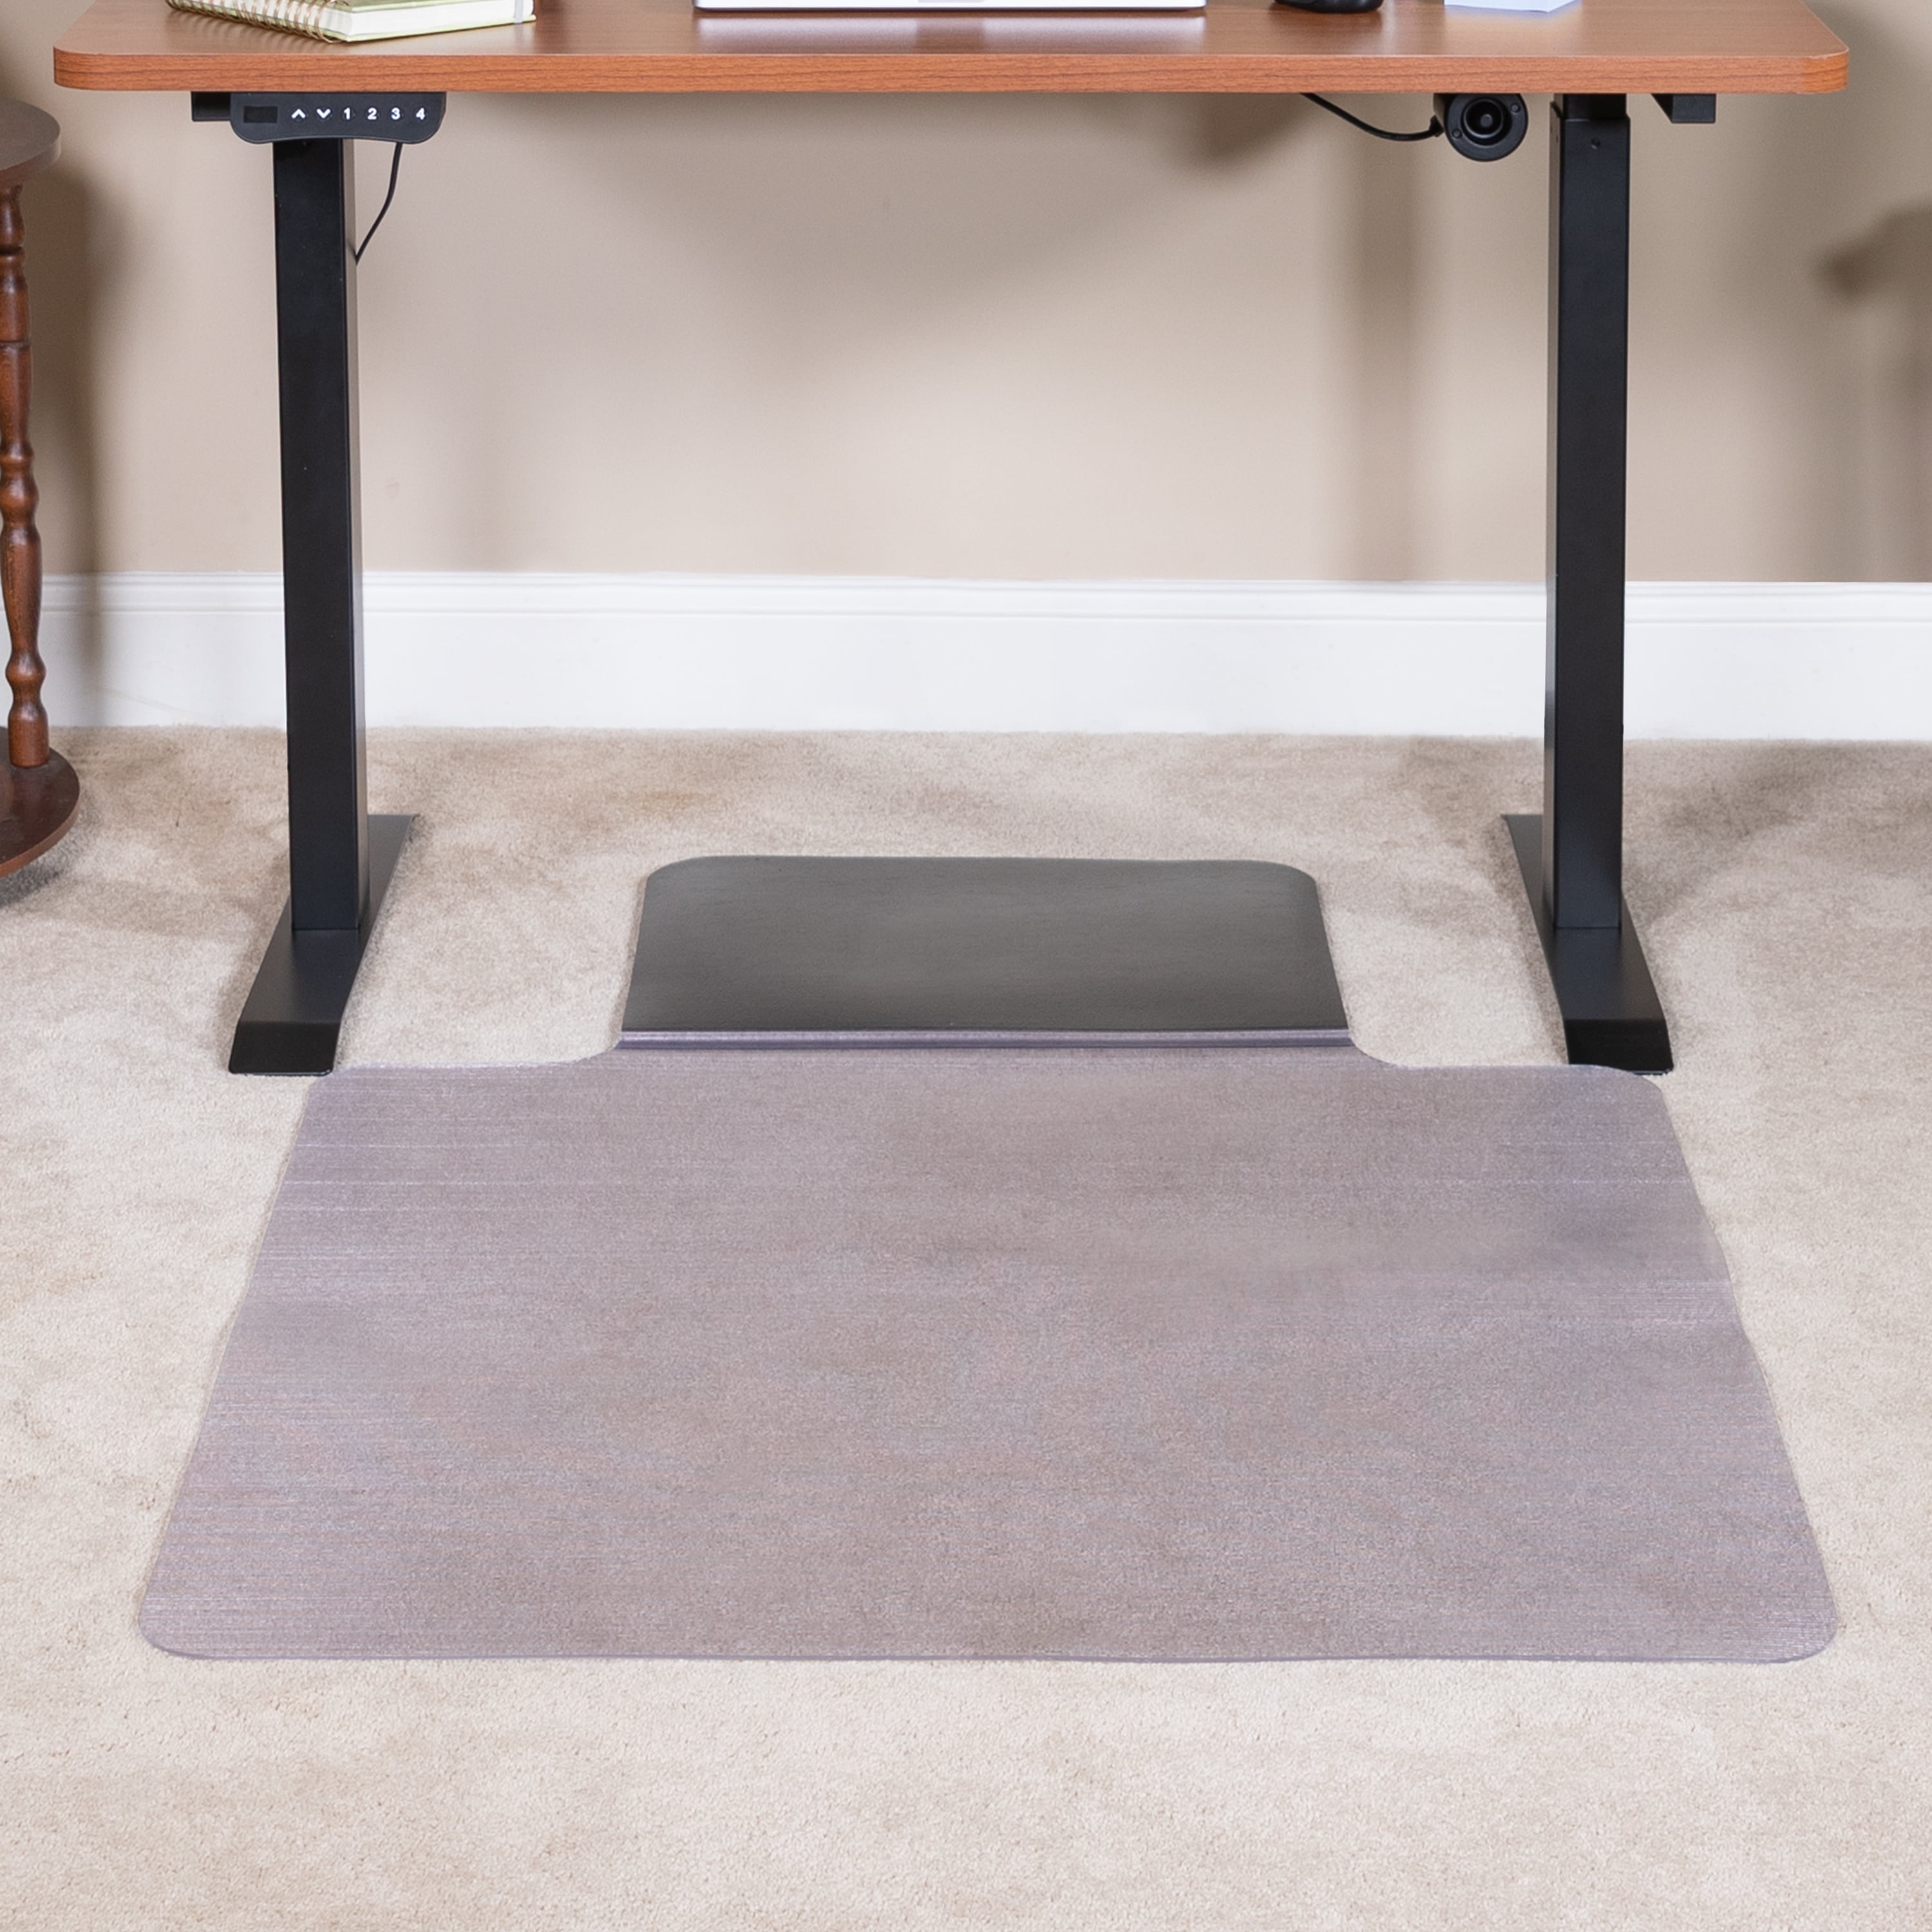 kangaroo original 3/4 standing mat kitchen rug, anti fatigue comfort  flooring, phthalate free, commercial grade pads, waterproof, ergonomic floor  pad, rugs for office stand up desk, 32x20 (brown) 